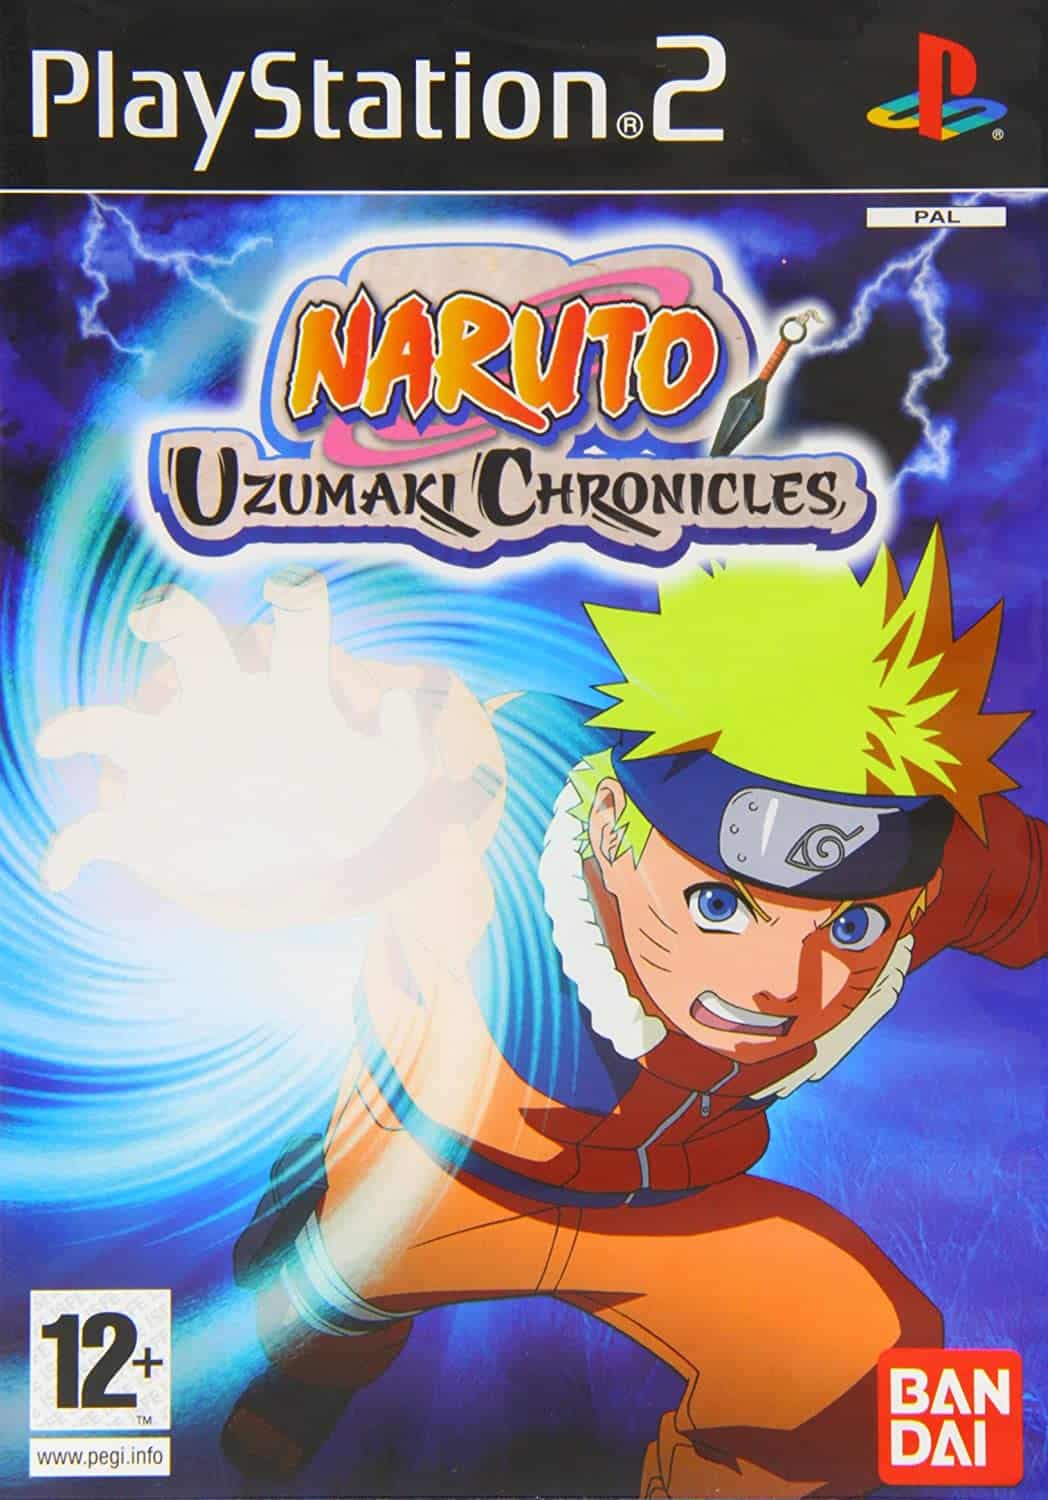 Naruto: Uzumaki Chronicles player count stats